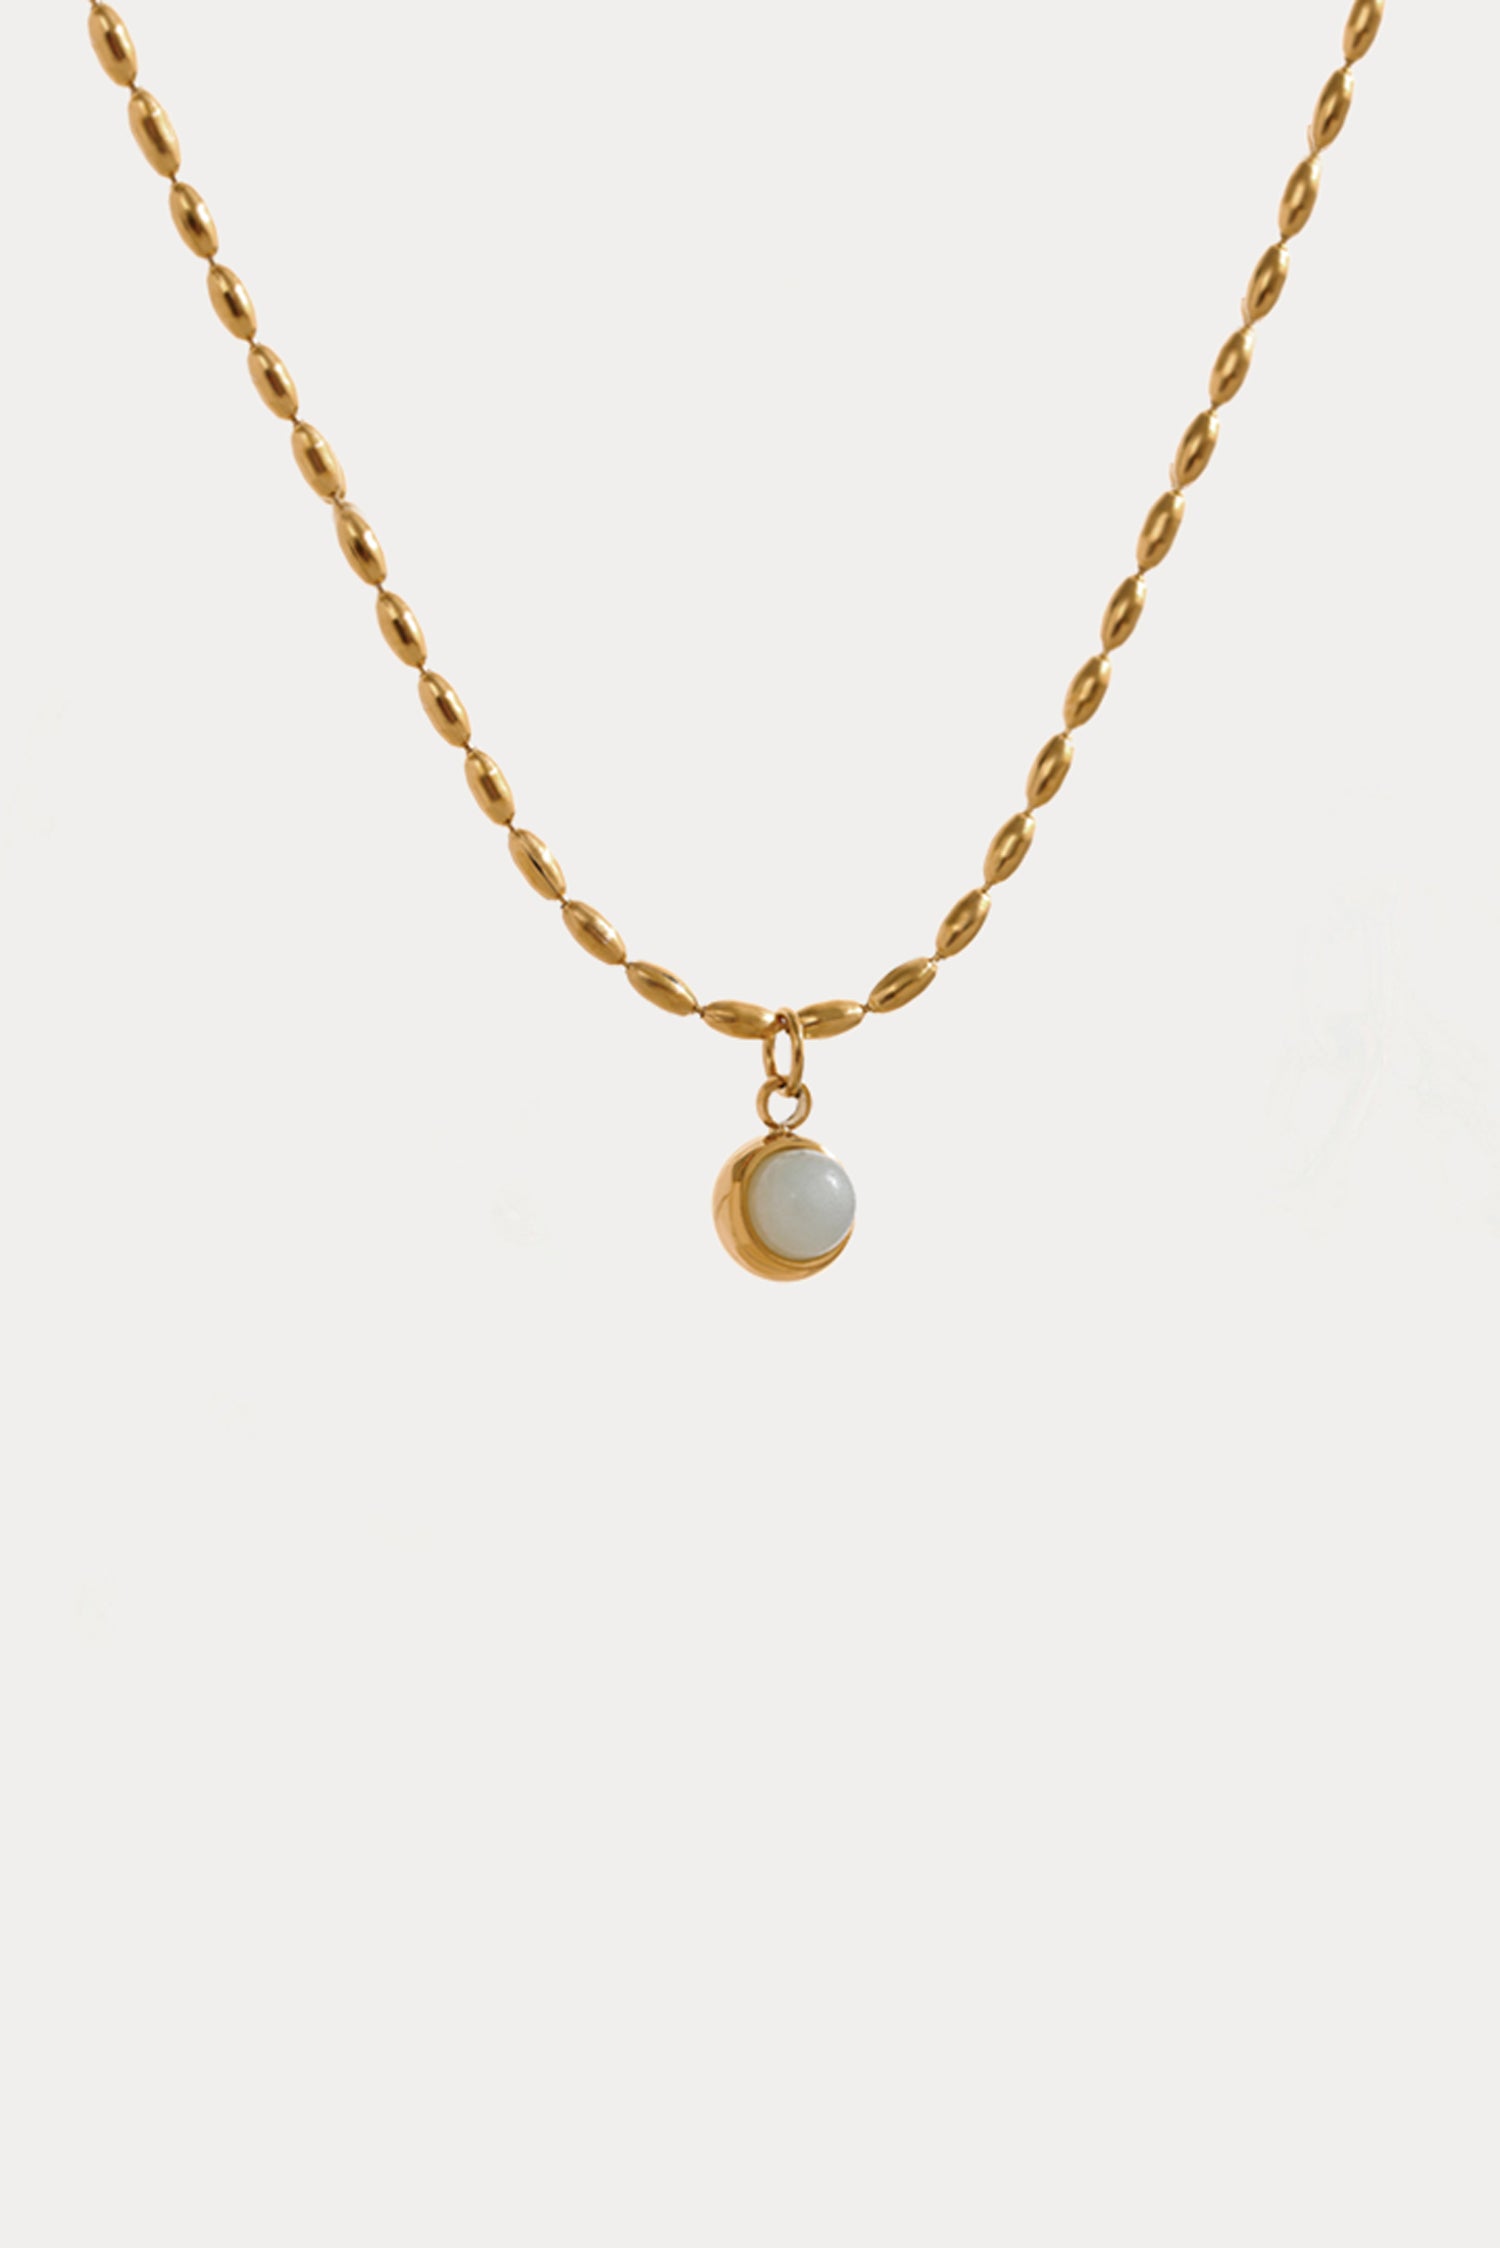 Sage stone necklace